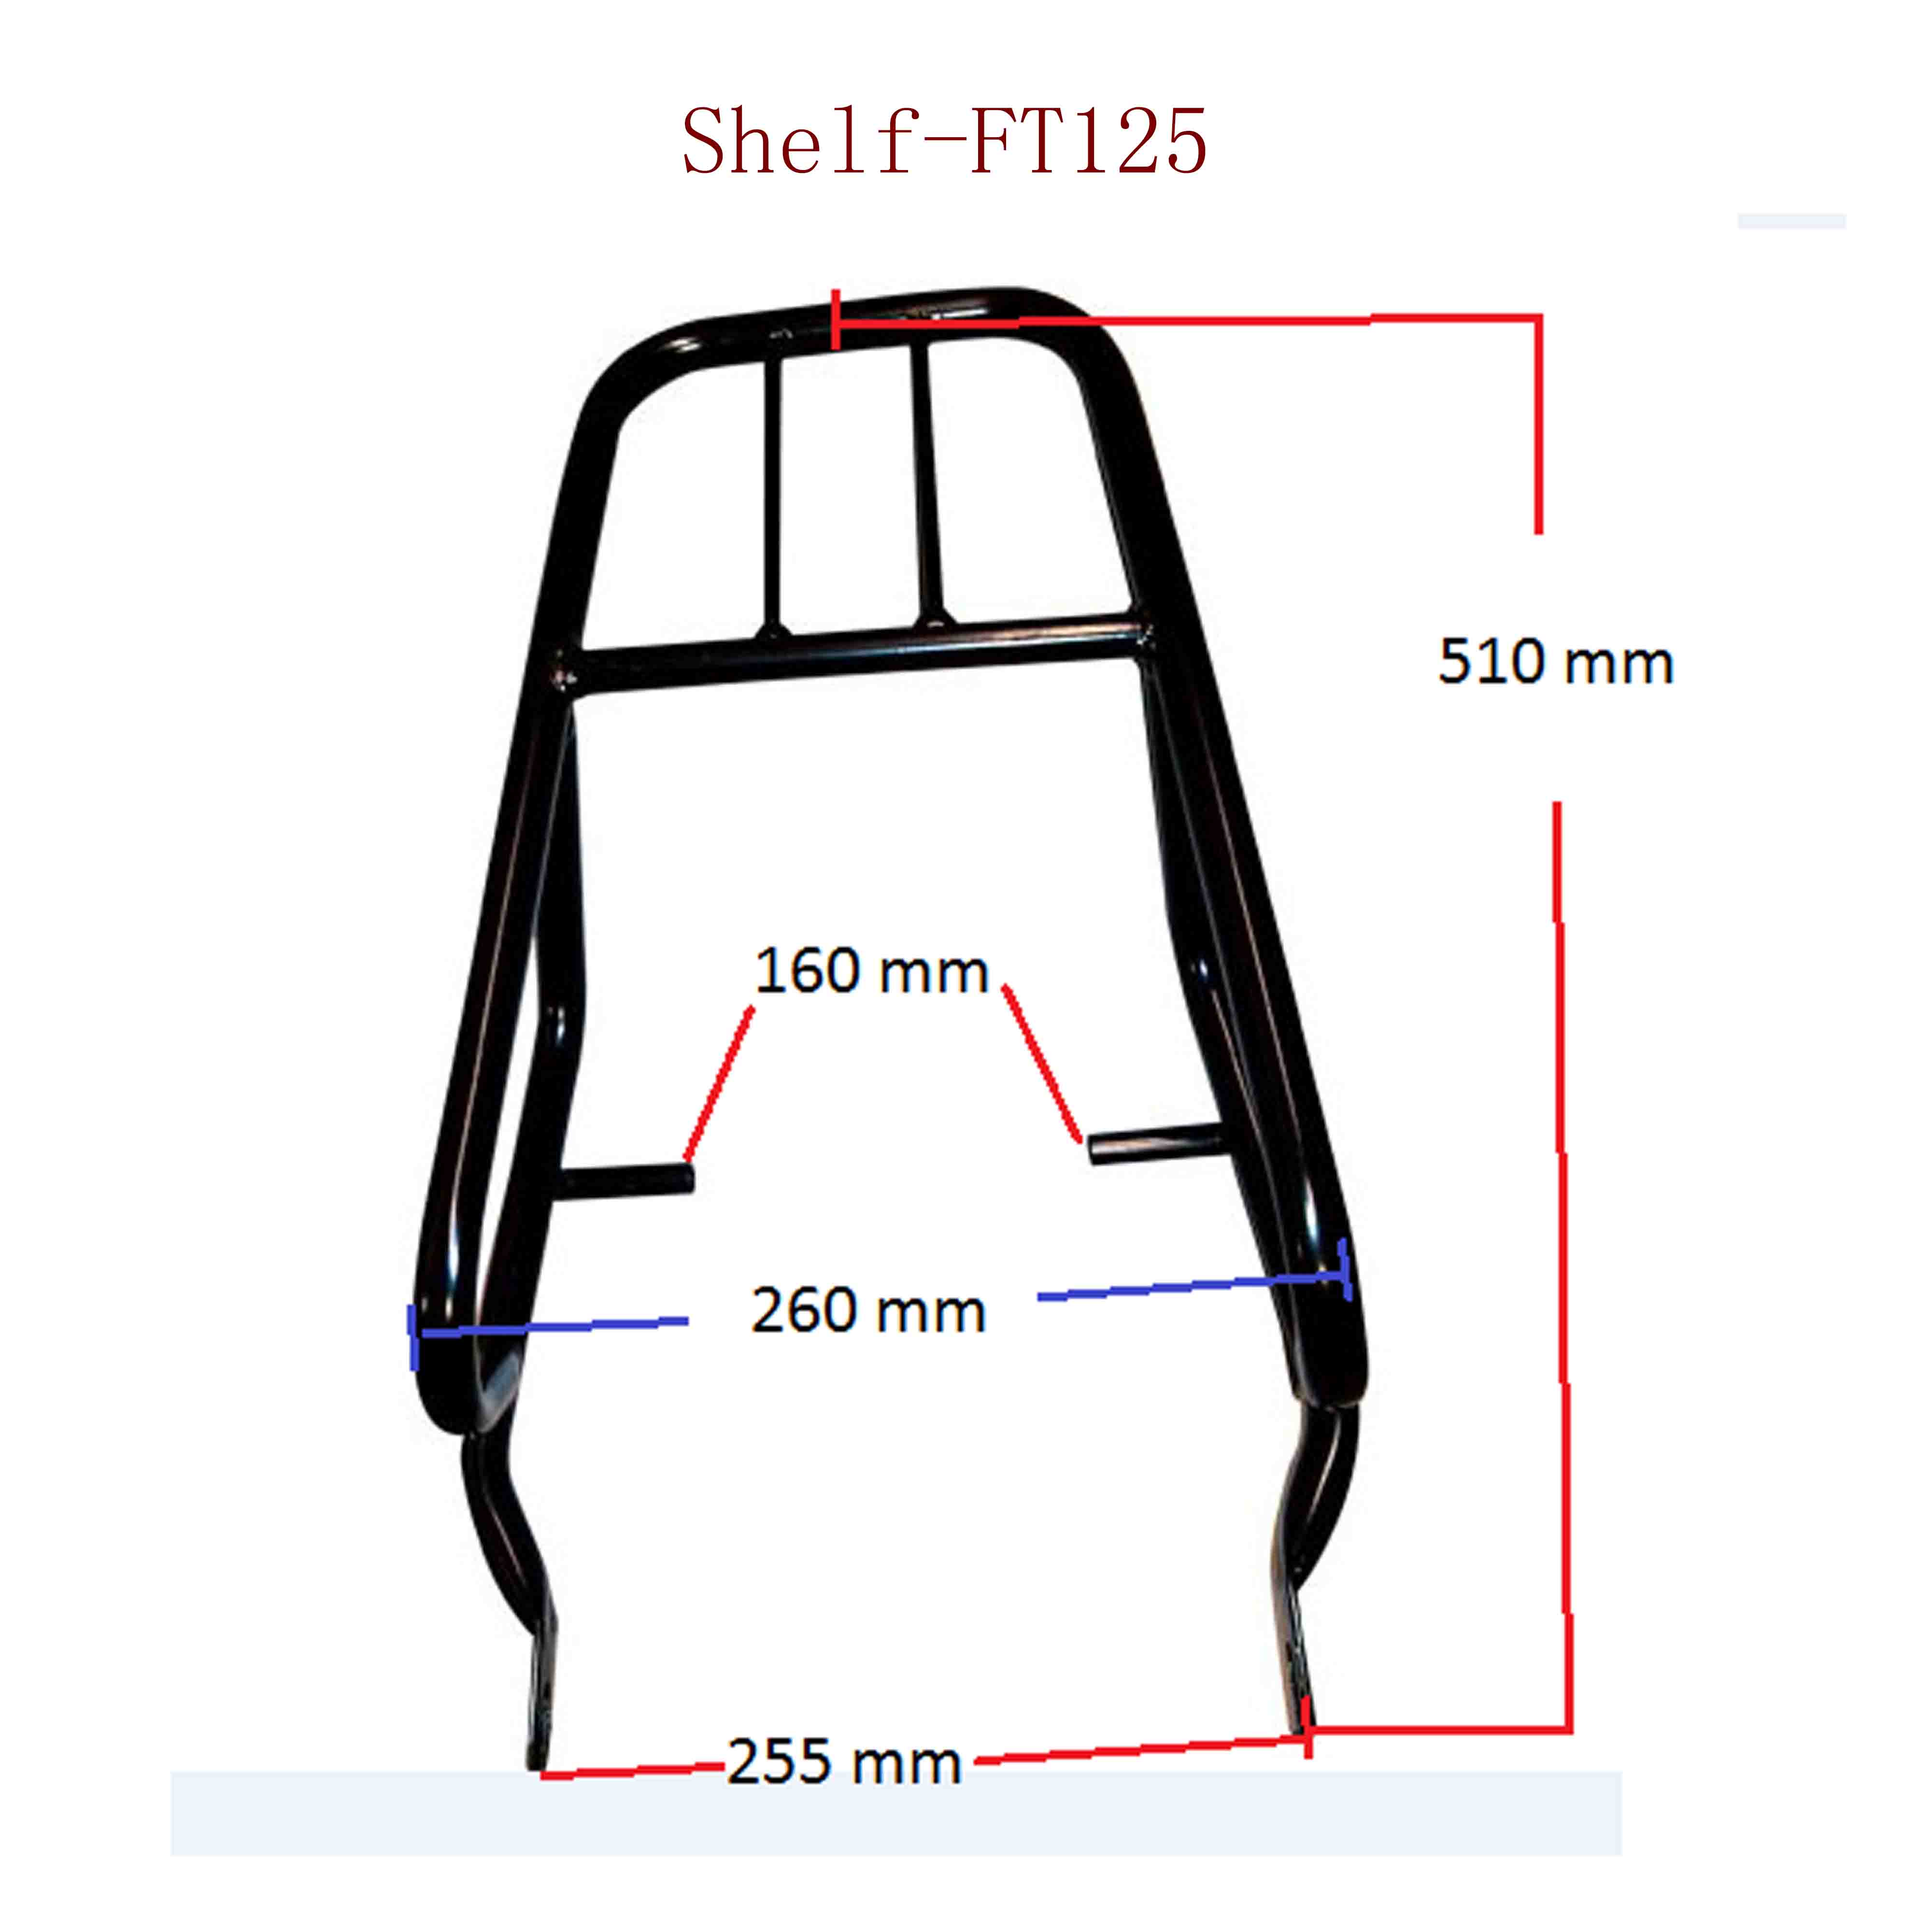 Shelf-FT125 